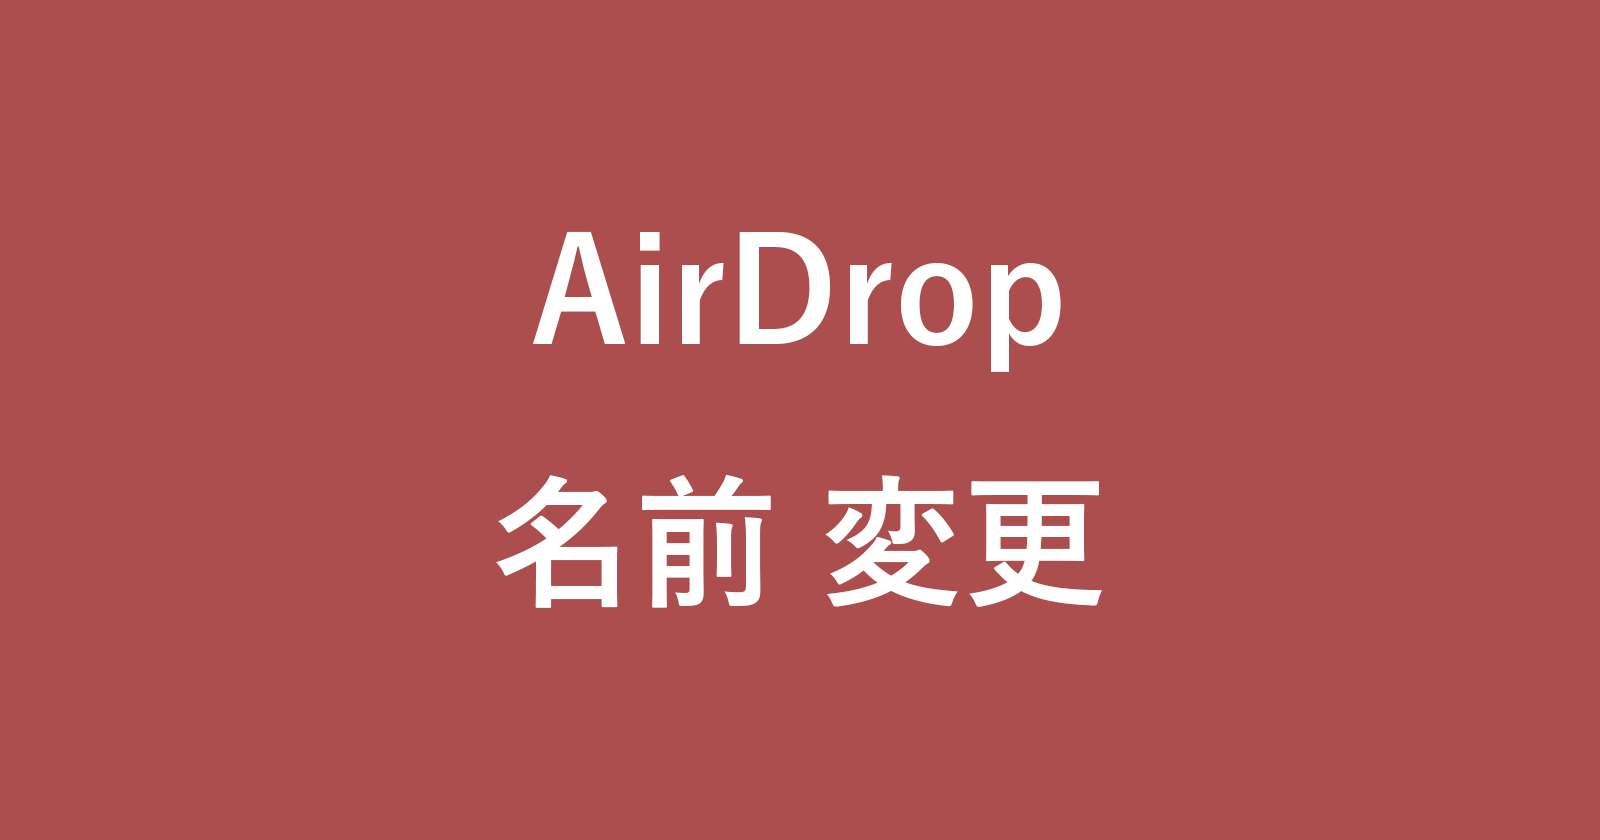 airdrop change name